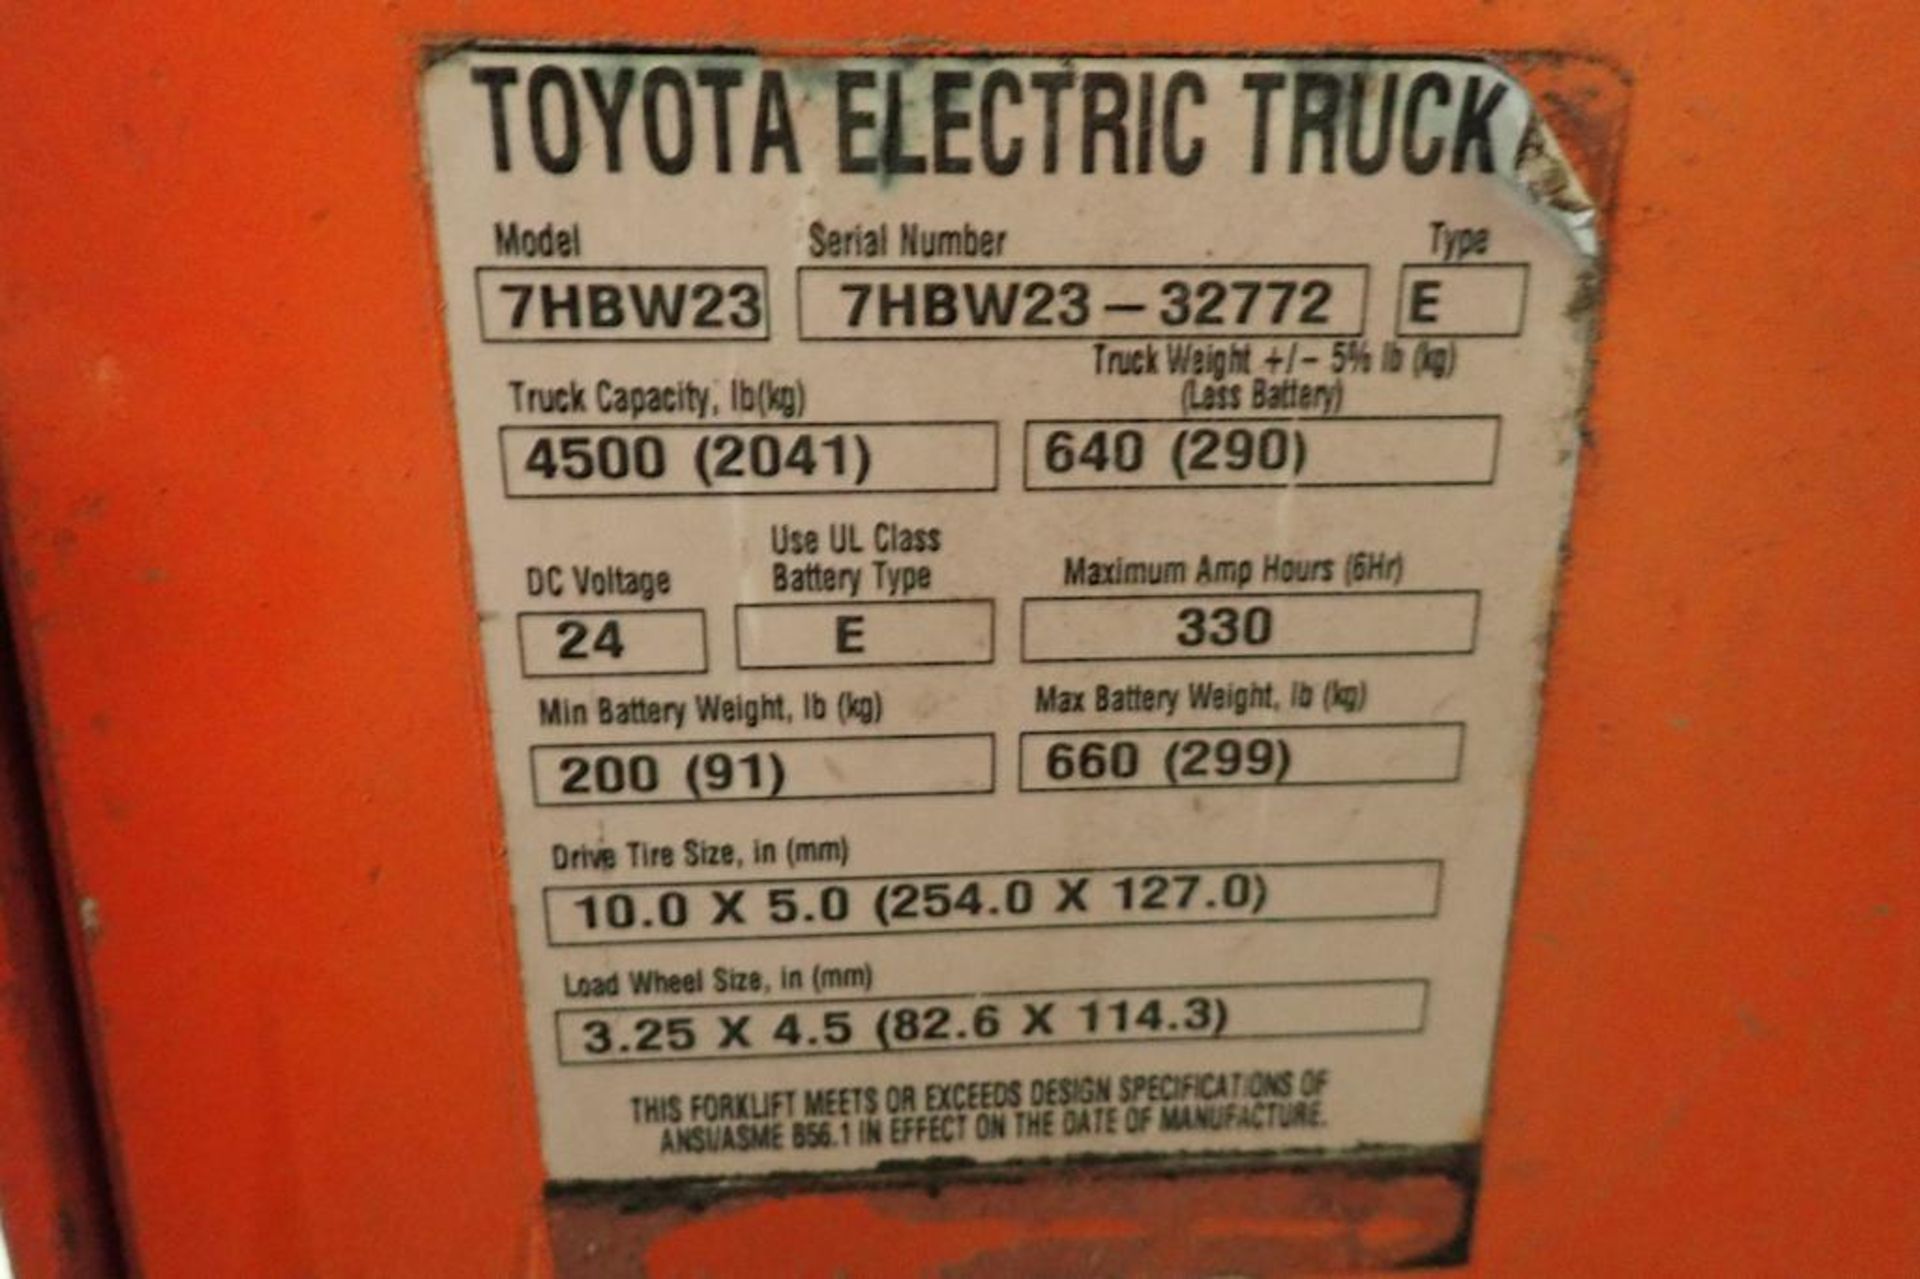 Toyota 24 volt electric pallet jack, Model 7HBW23, SN 7HBW23-32772, 4,500 lb. capacity, condition un - Image 6 of 6